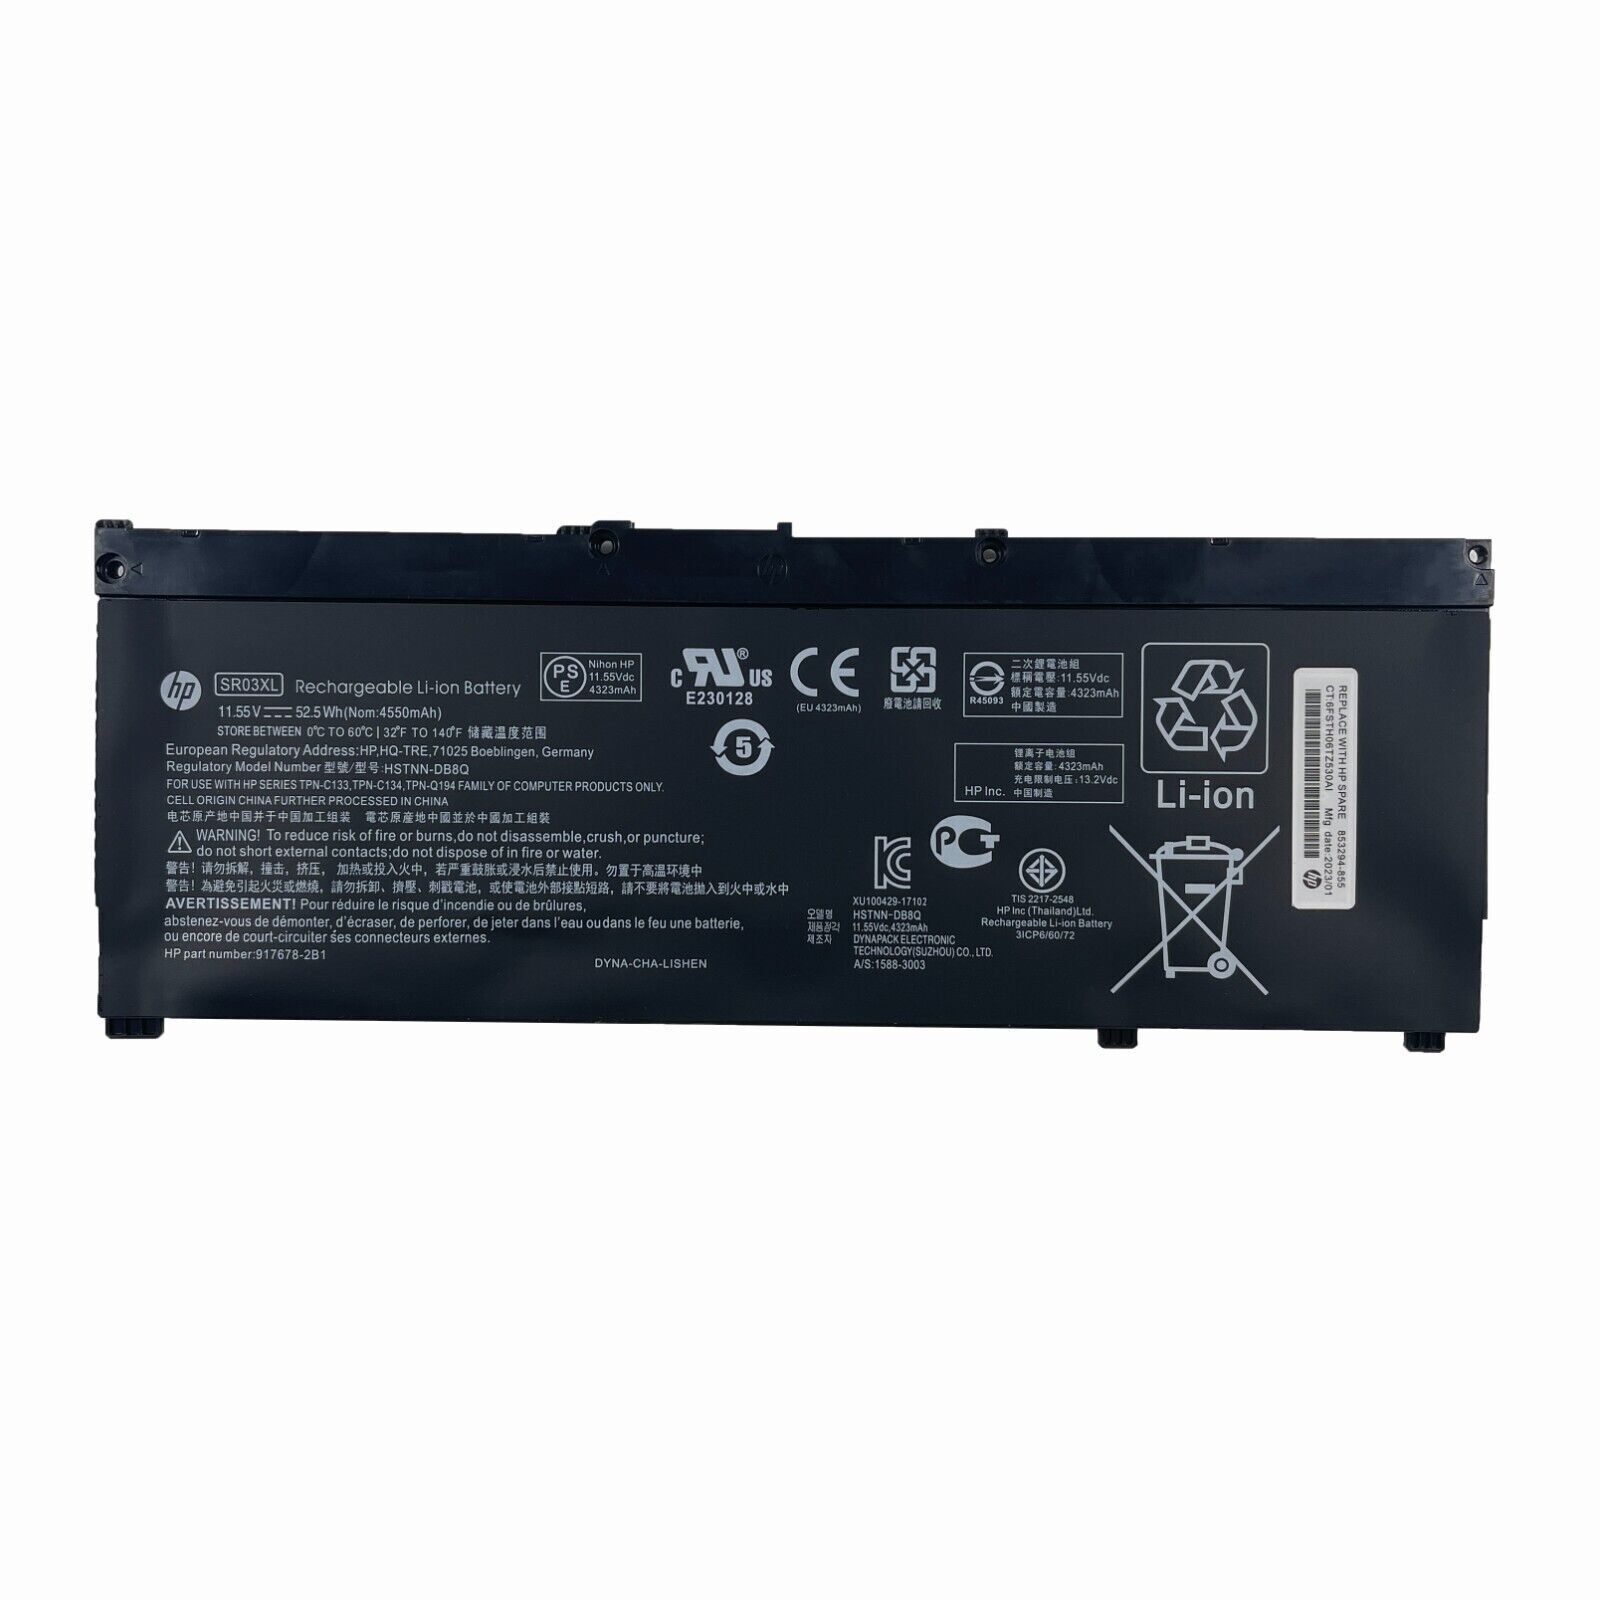 Genuine 52.5Wh SR03XL Battery for HP Pavilion 15-cx Envy 15-cn 17-bw L08855-855